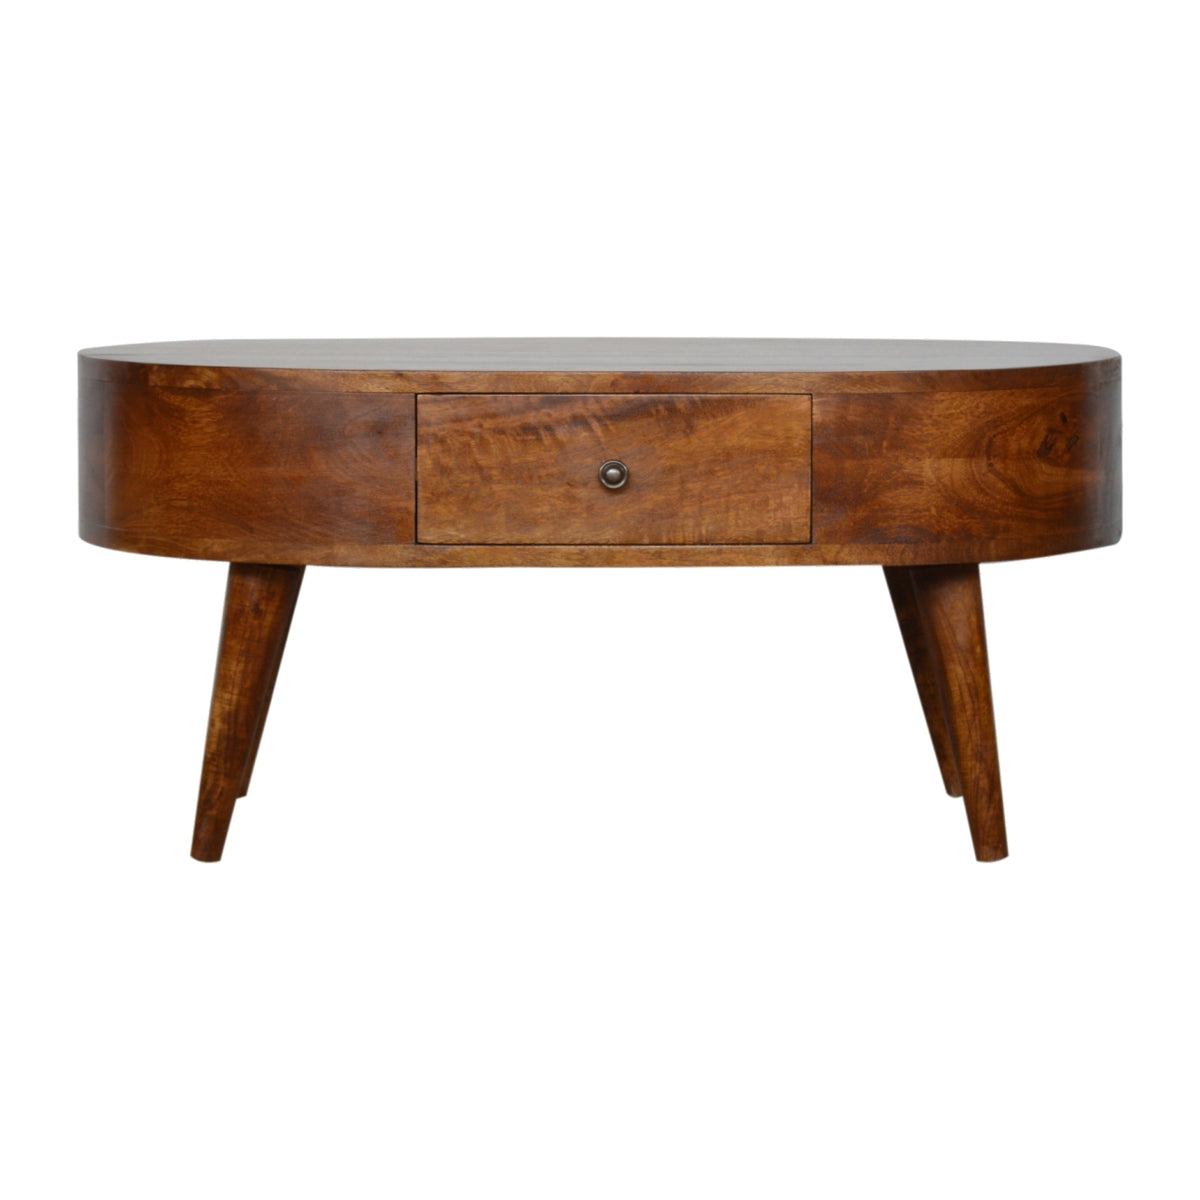 Dark Walnut Coffee Table for sale UK with storage dark wood coffee table